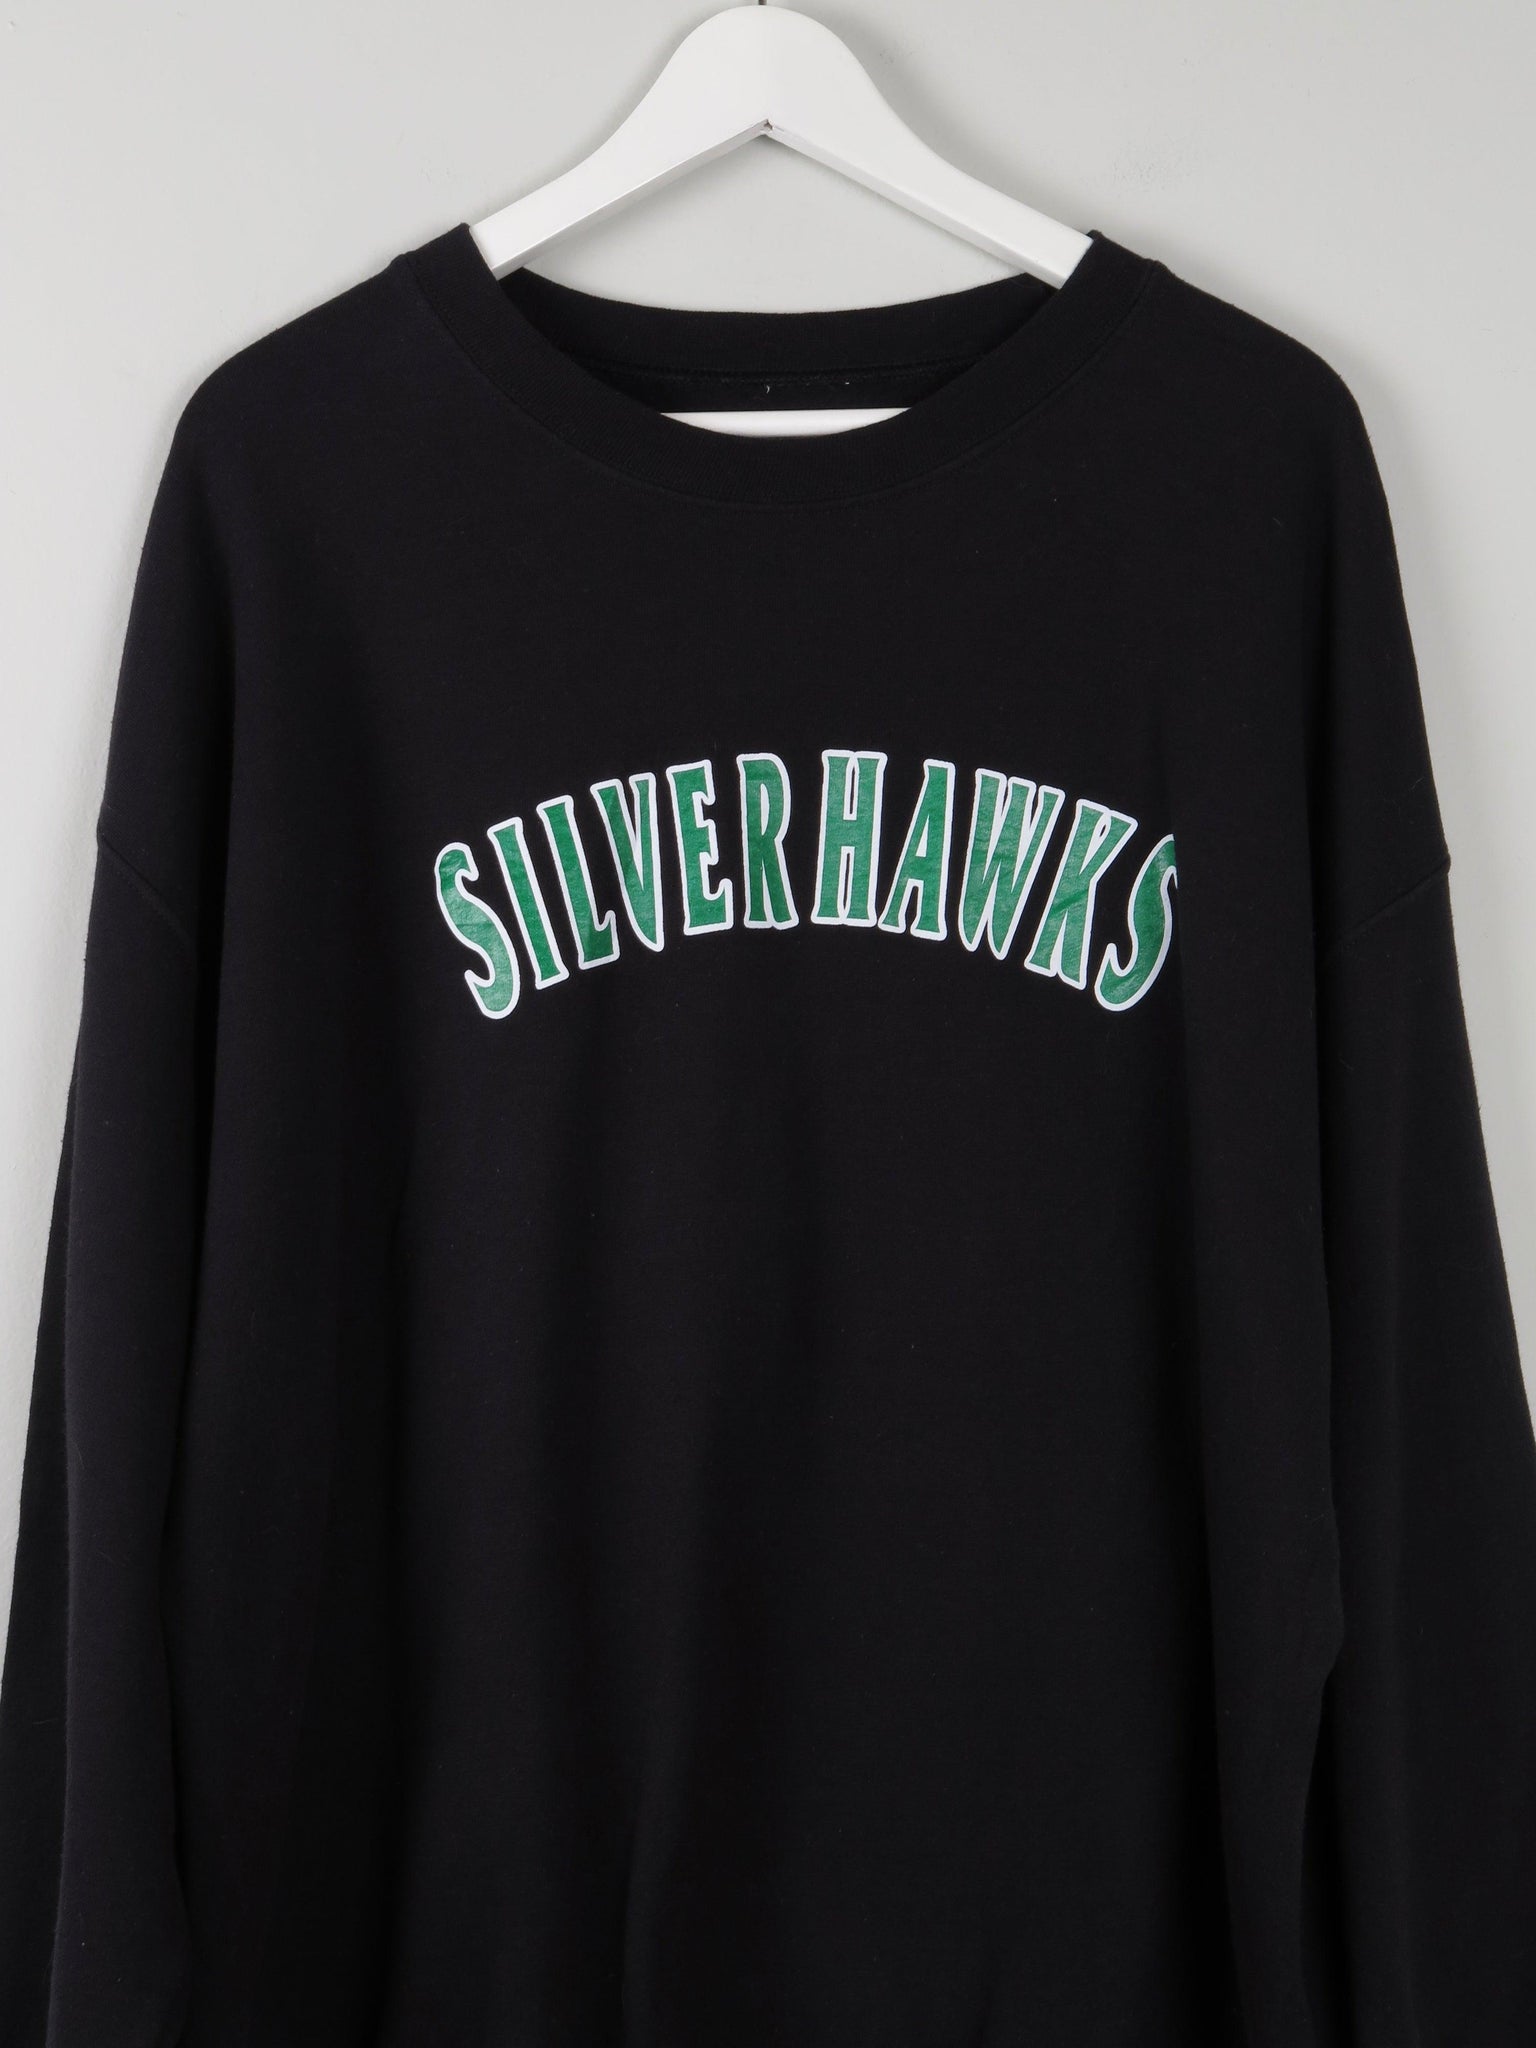 Men's Black Vintage Silverhawks  US Sweatshirt L - The Harlequin